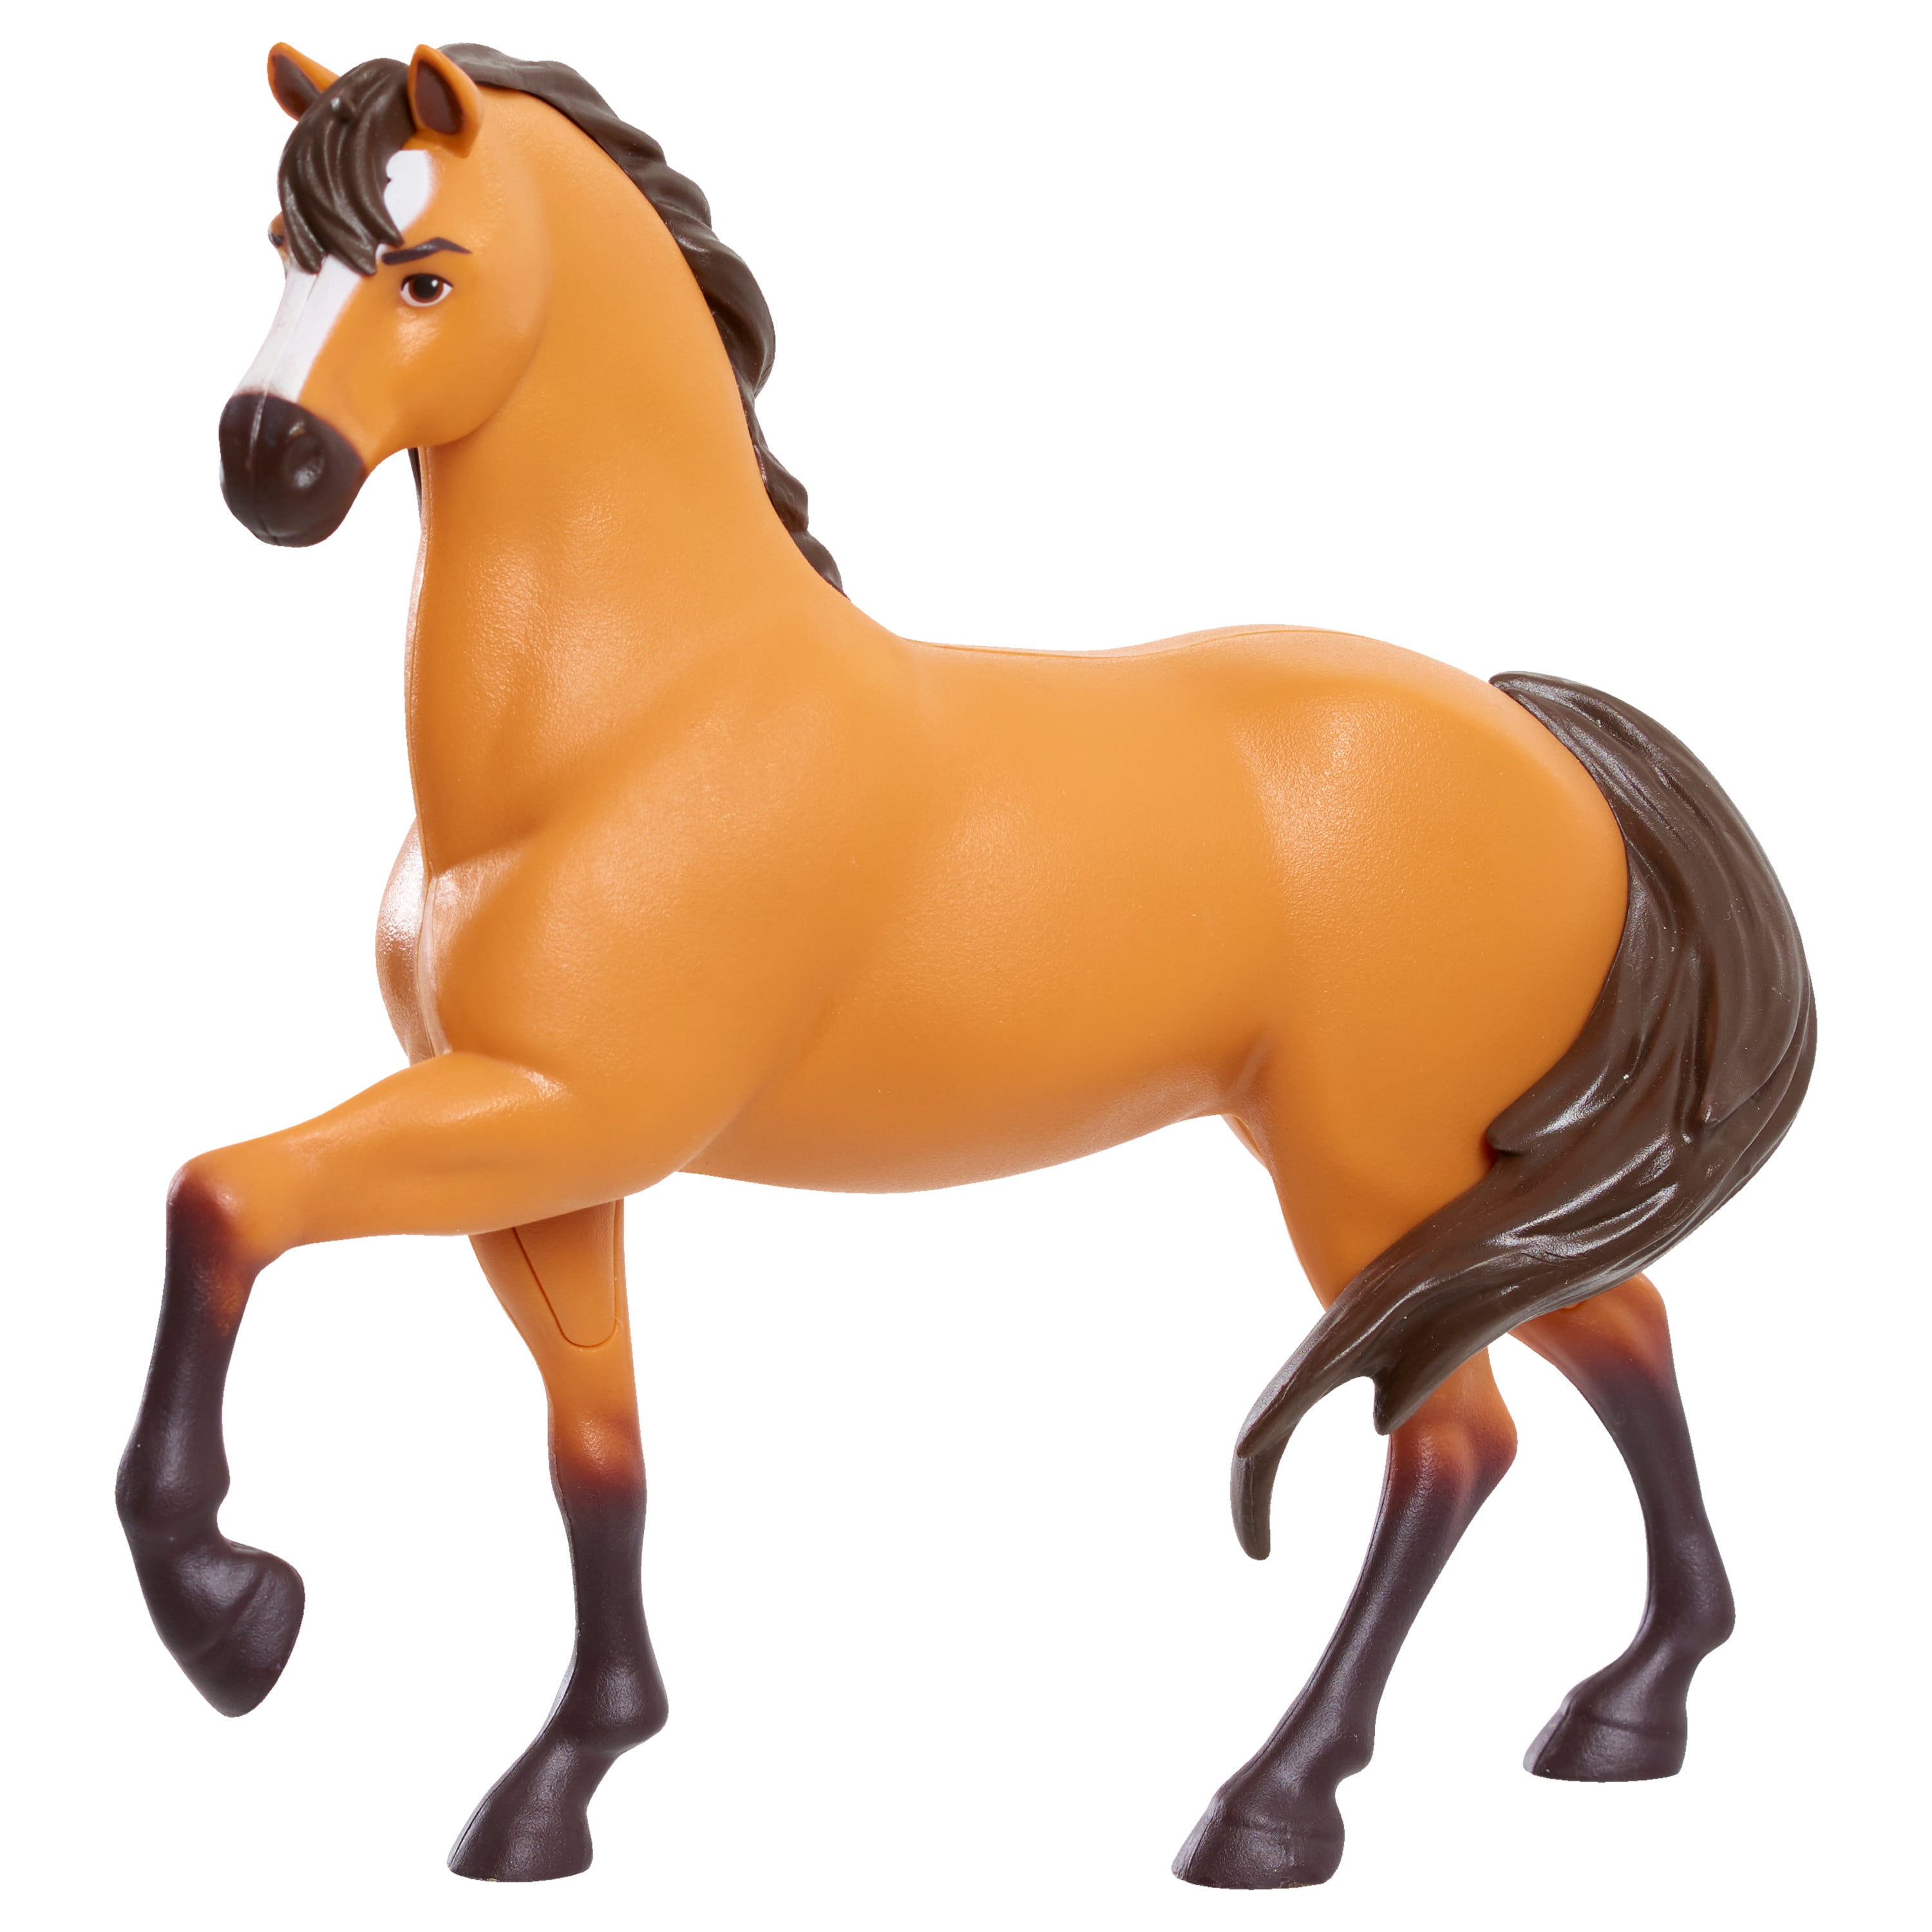 U PICK 2020 McDonald's DreamWorks SPIRIT RIDING FREE Horses-Only $3.50 Ship/1+ 